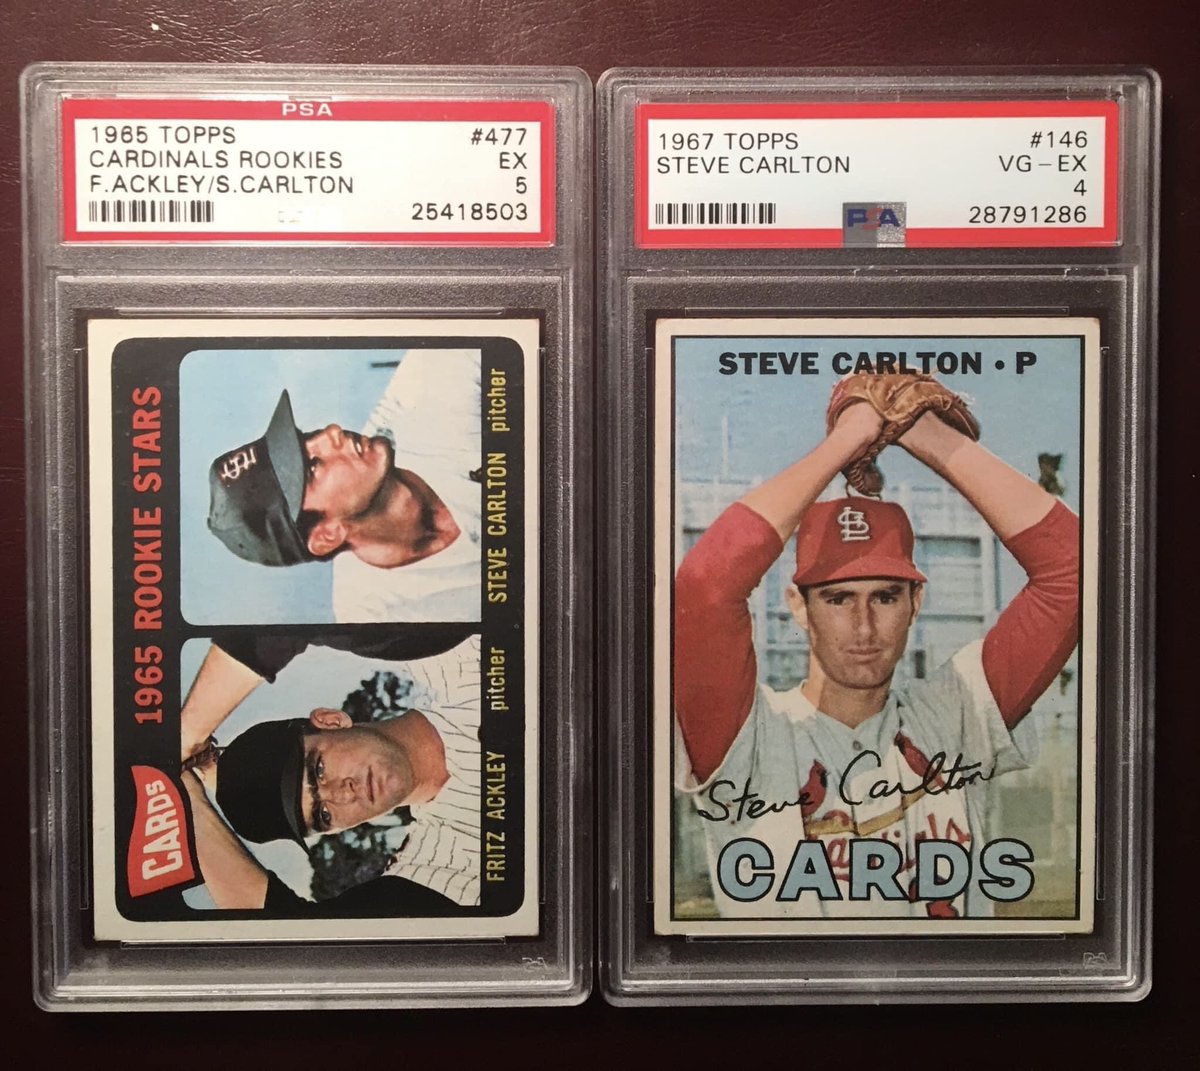 #TheHarmonCollection 
First two cards 

🎂Let’s wish Steve Carlton a Happy Birthday!🎂

#MLBHOF #MLBAllStar #SteveCarlton